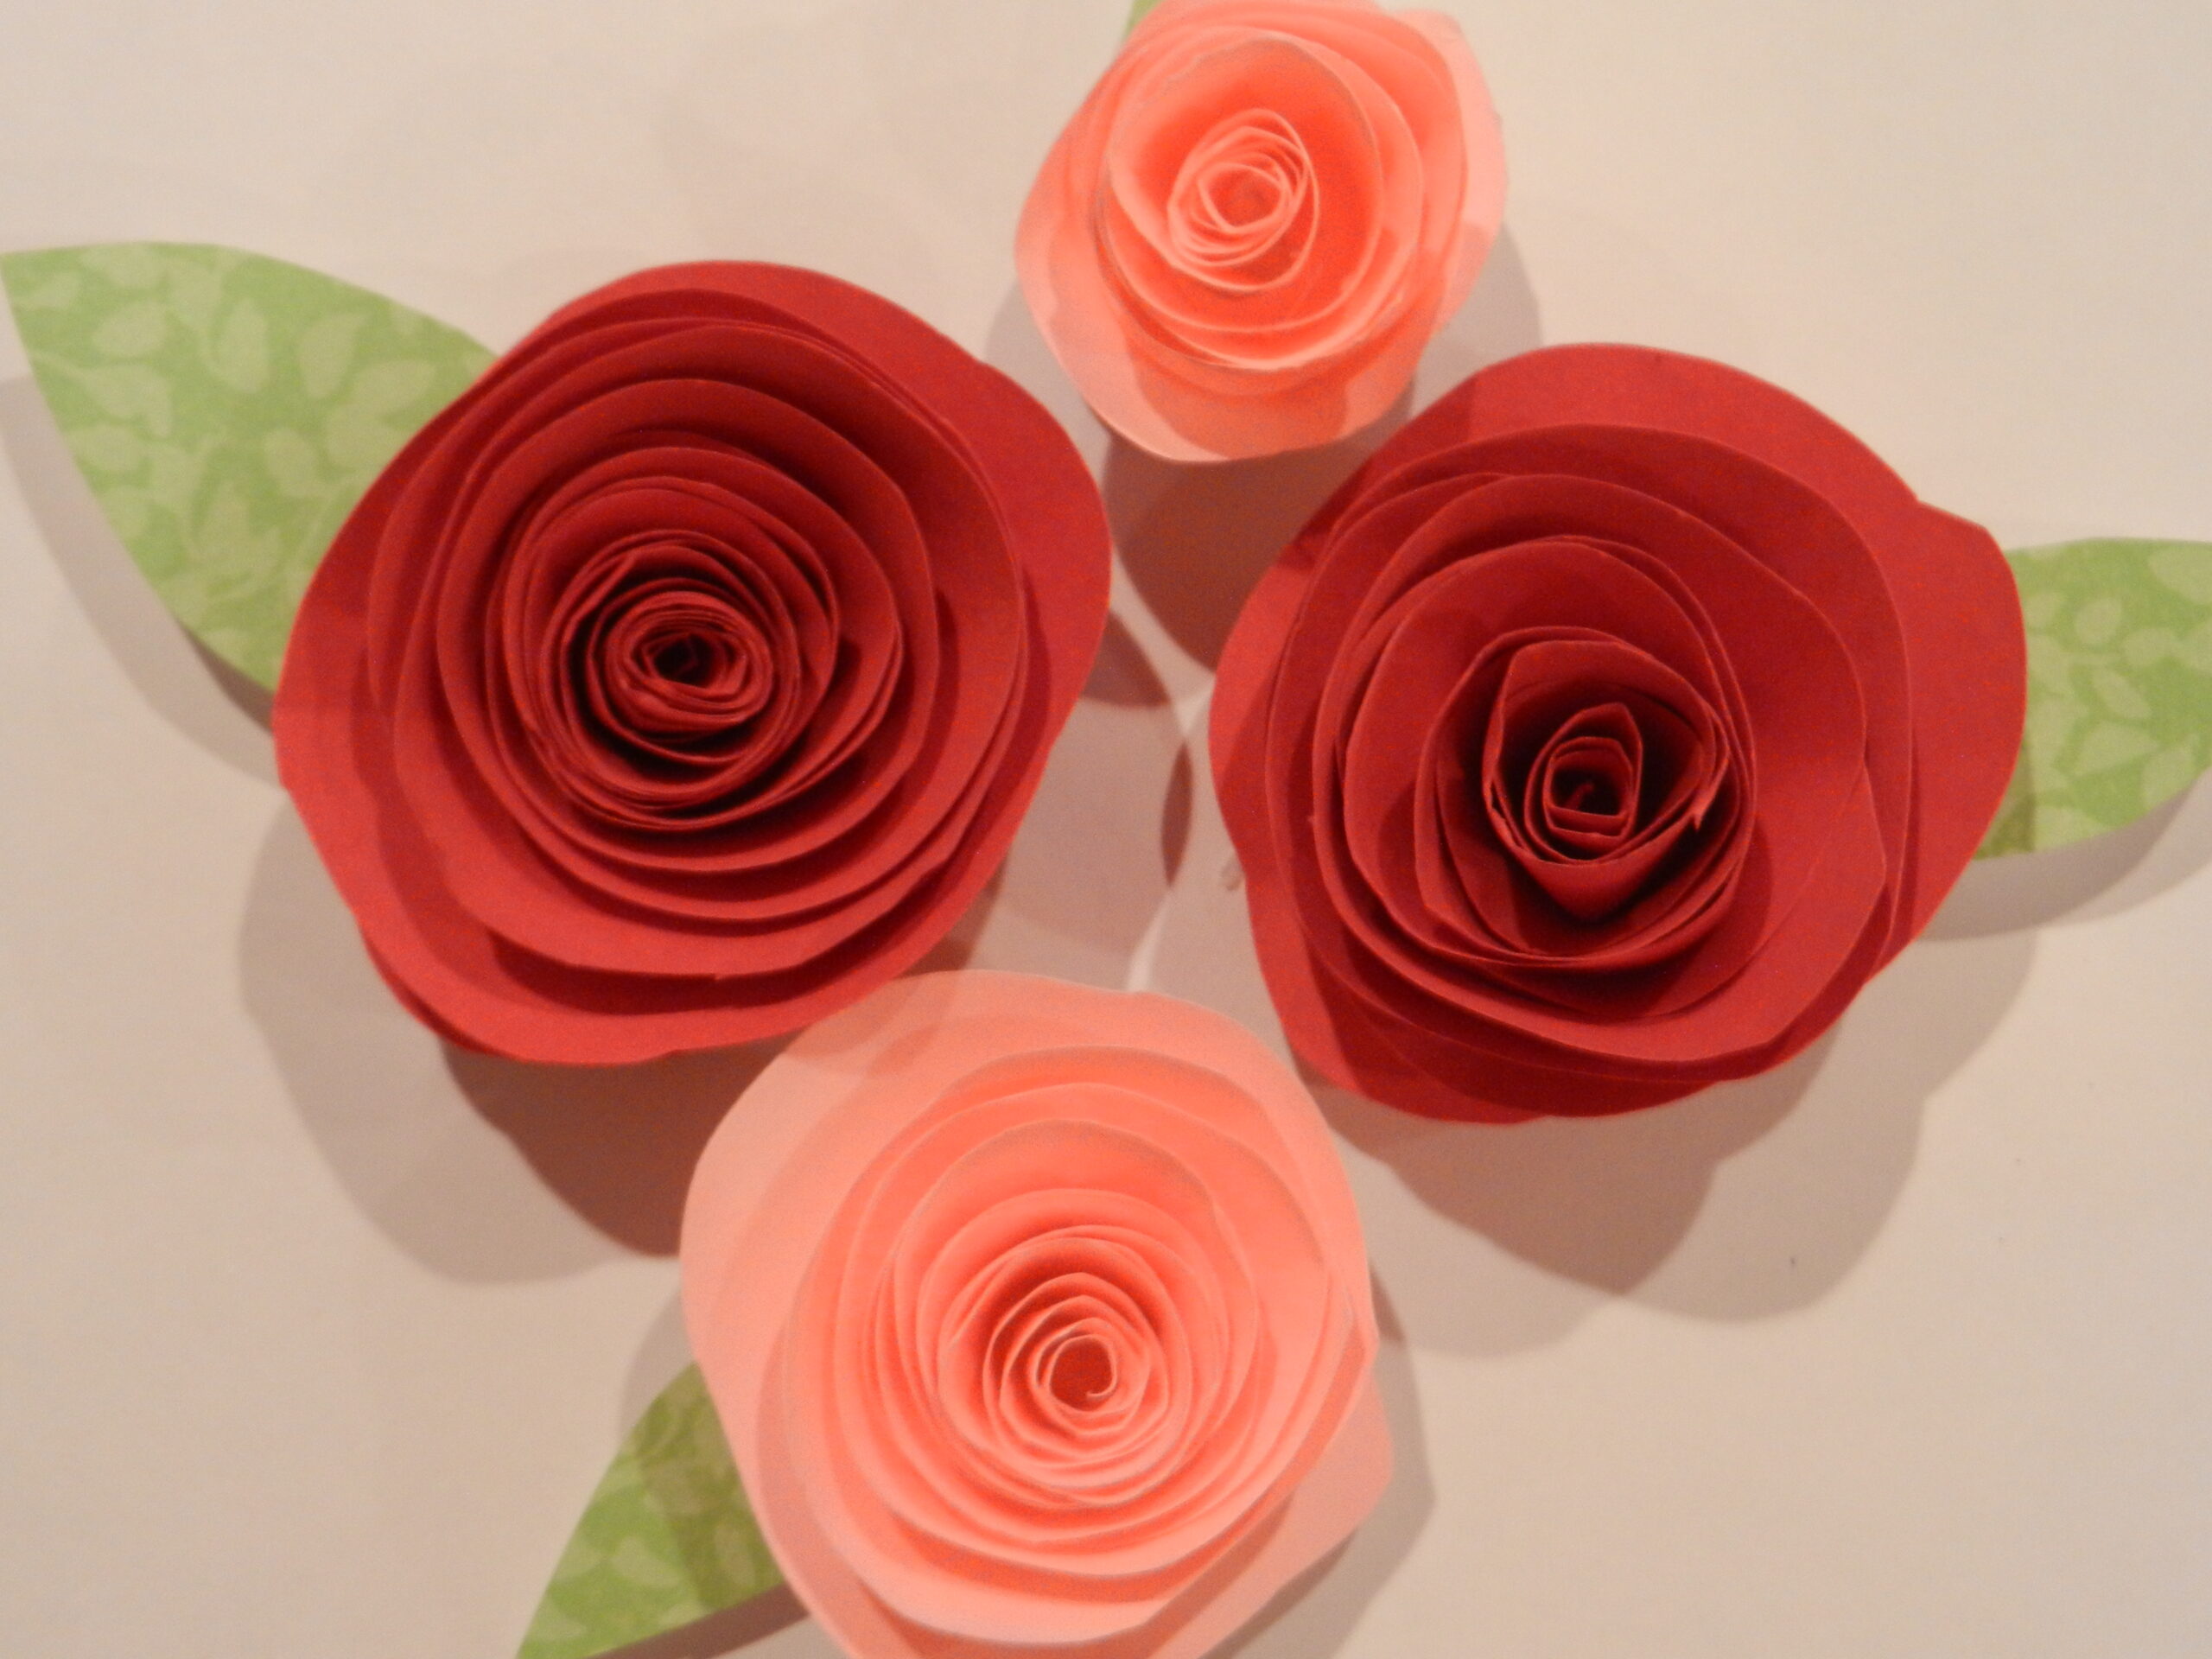 Pretty Paper Roses - Desks & Dreams